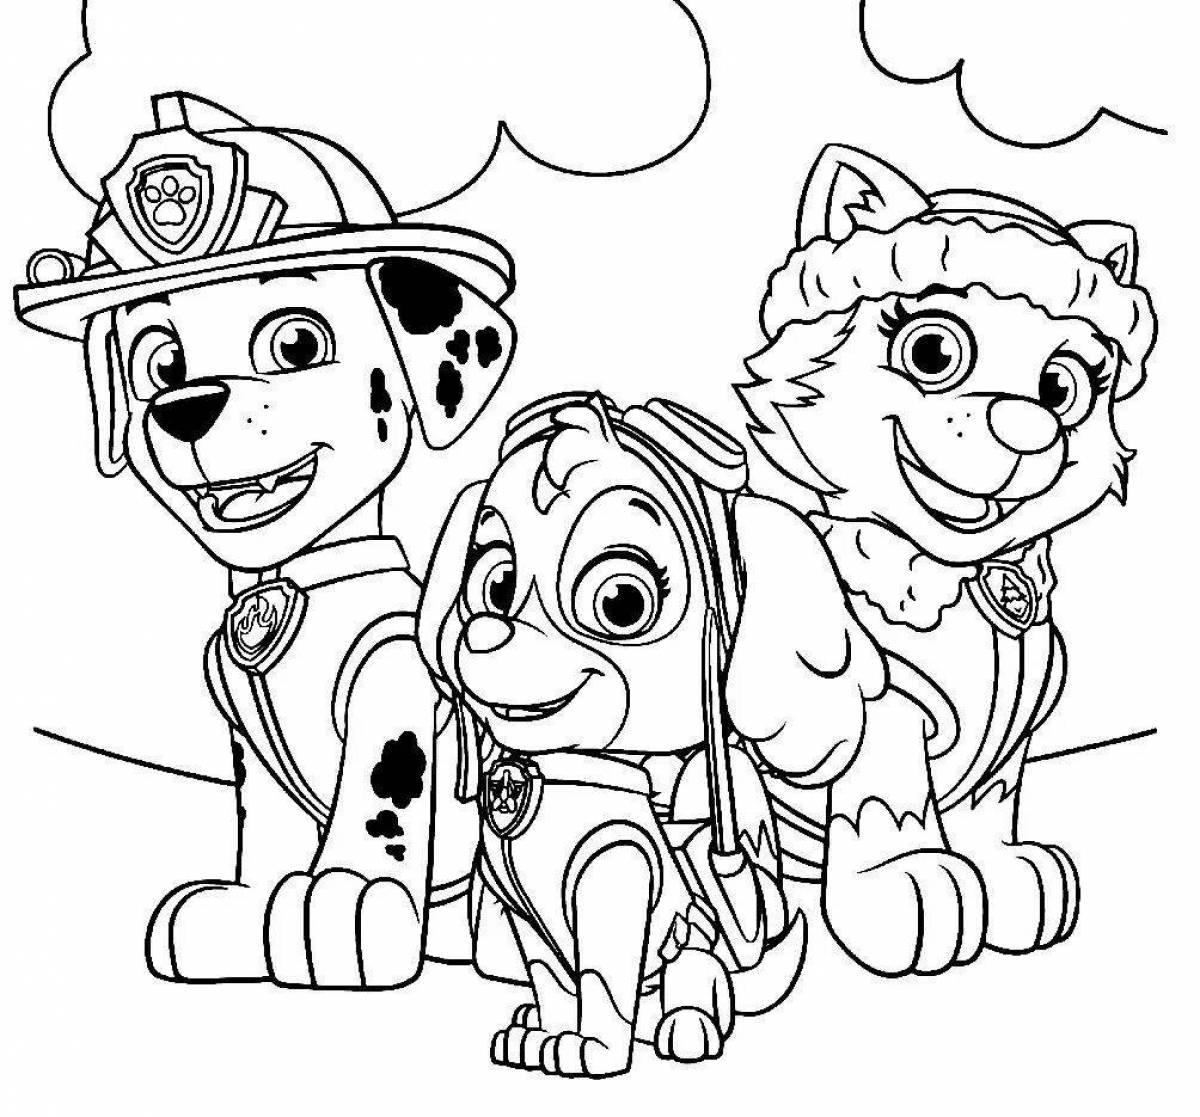 Coloring page joyful marshal for kids